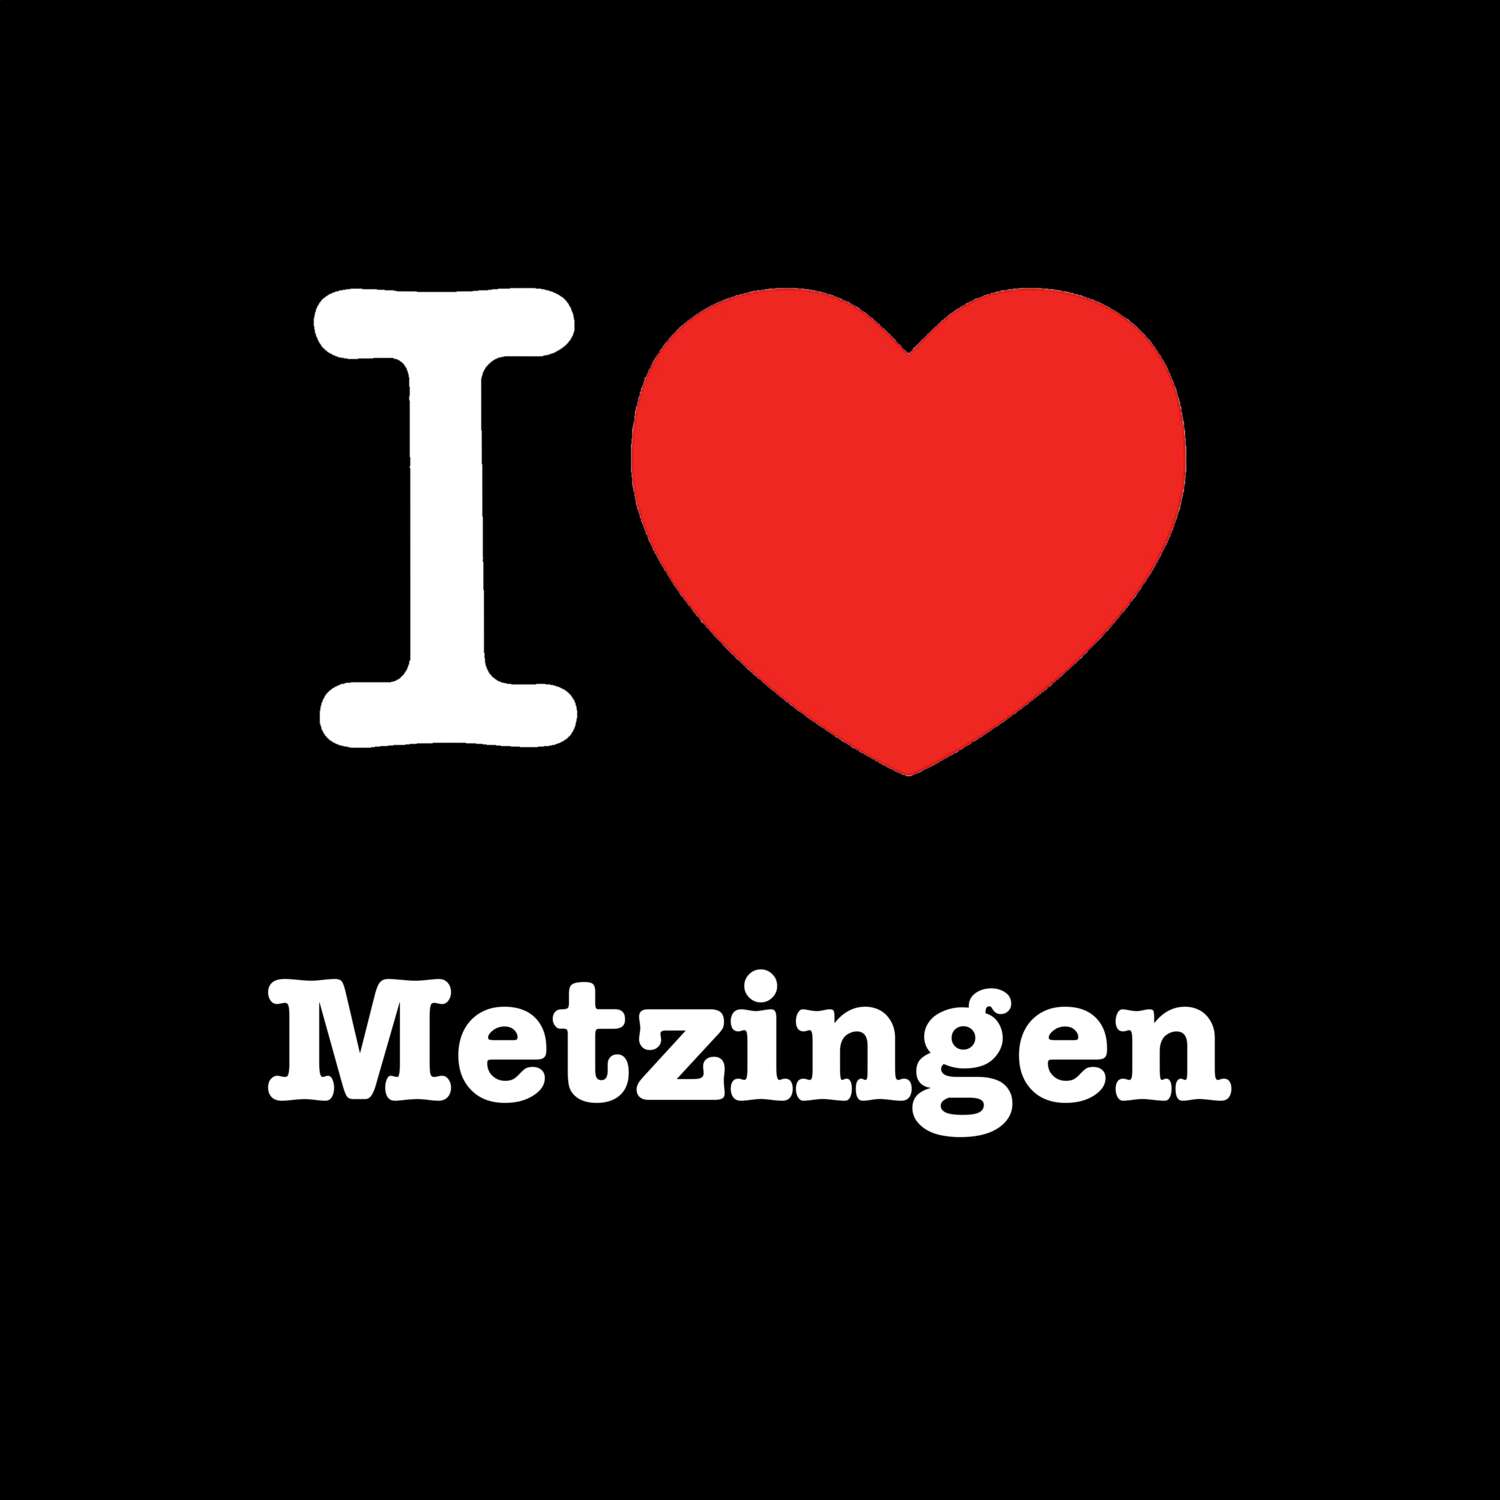 Metzingen T-Shirt »I love«